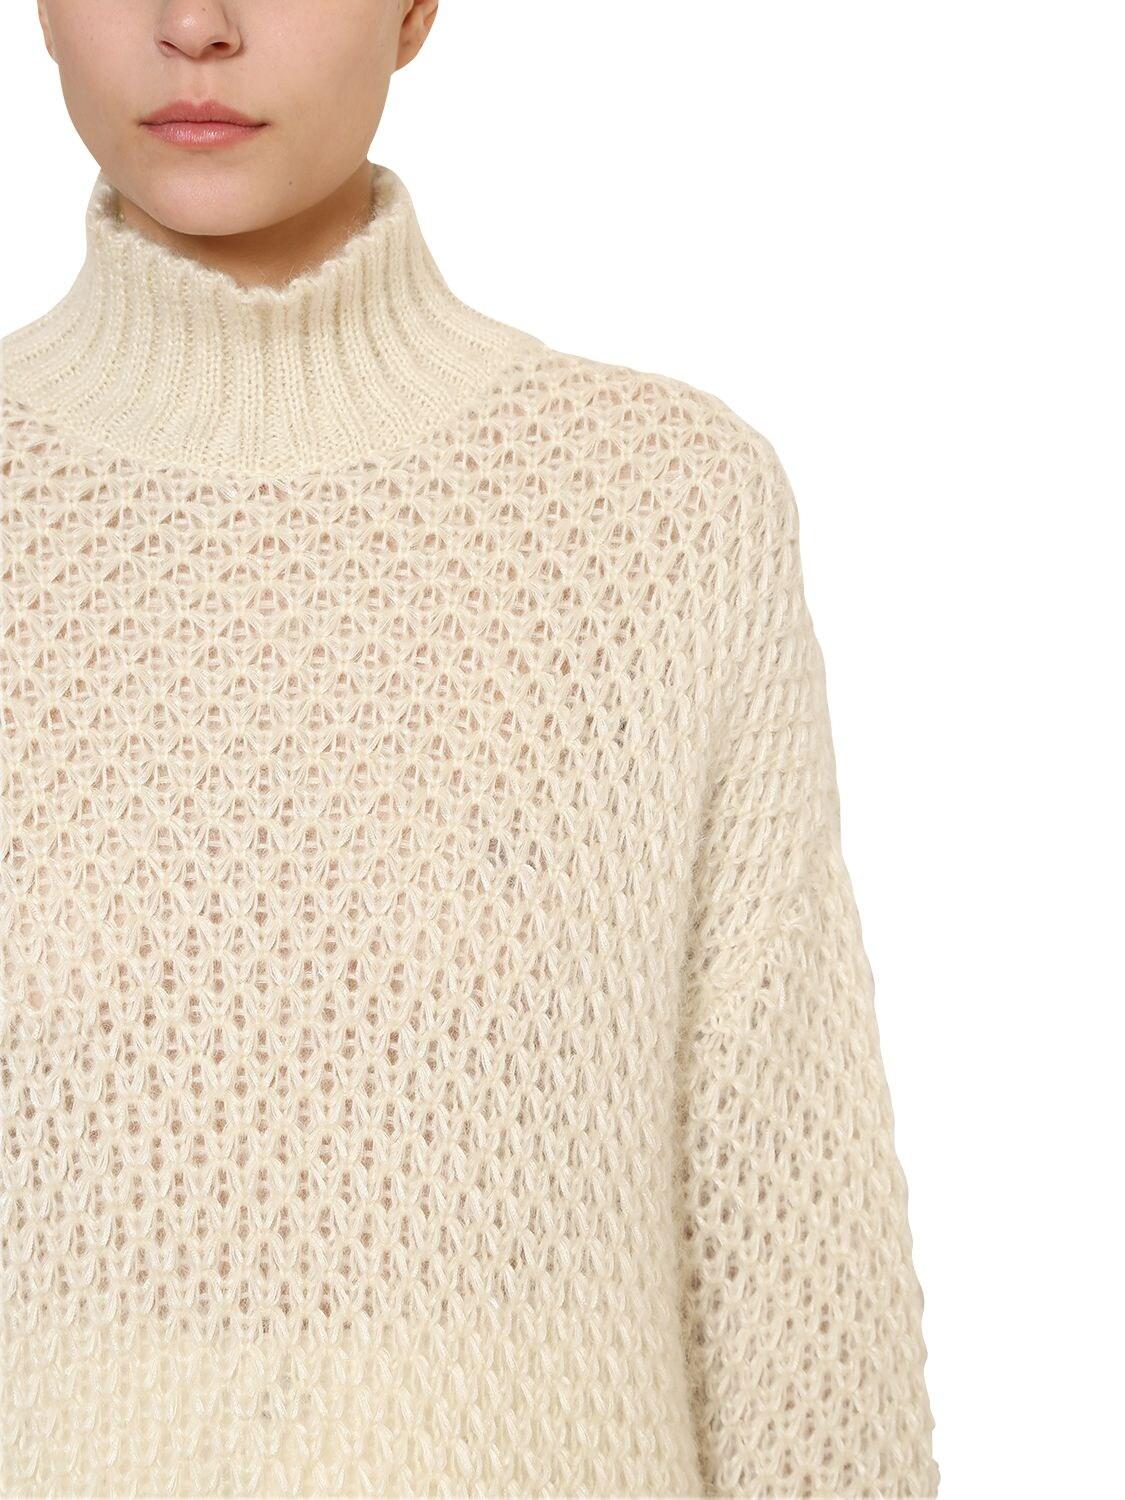 Alberta Ferretti Superkid Mohair Blend Knit Sweater in White - Lyst